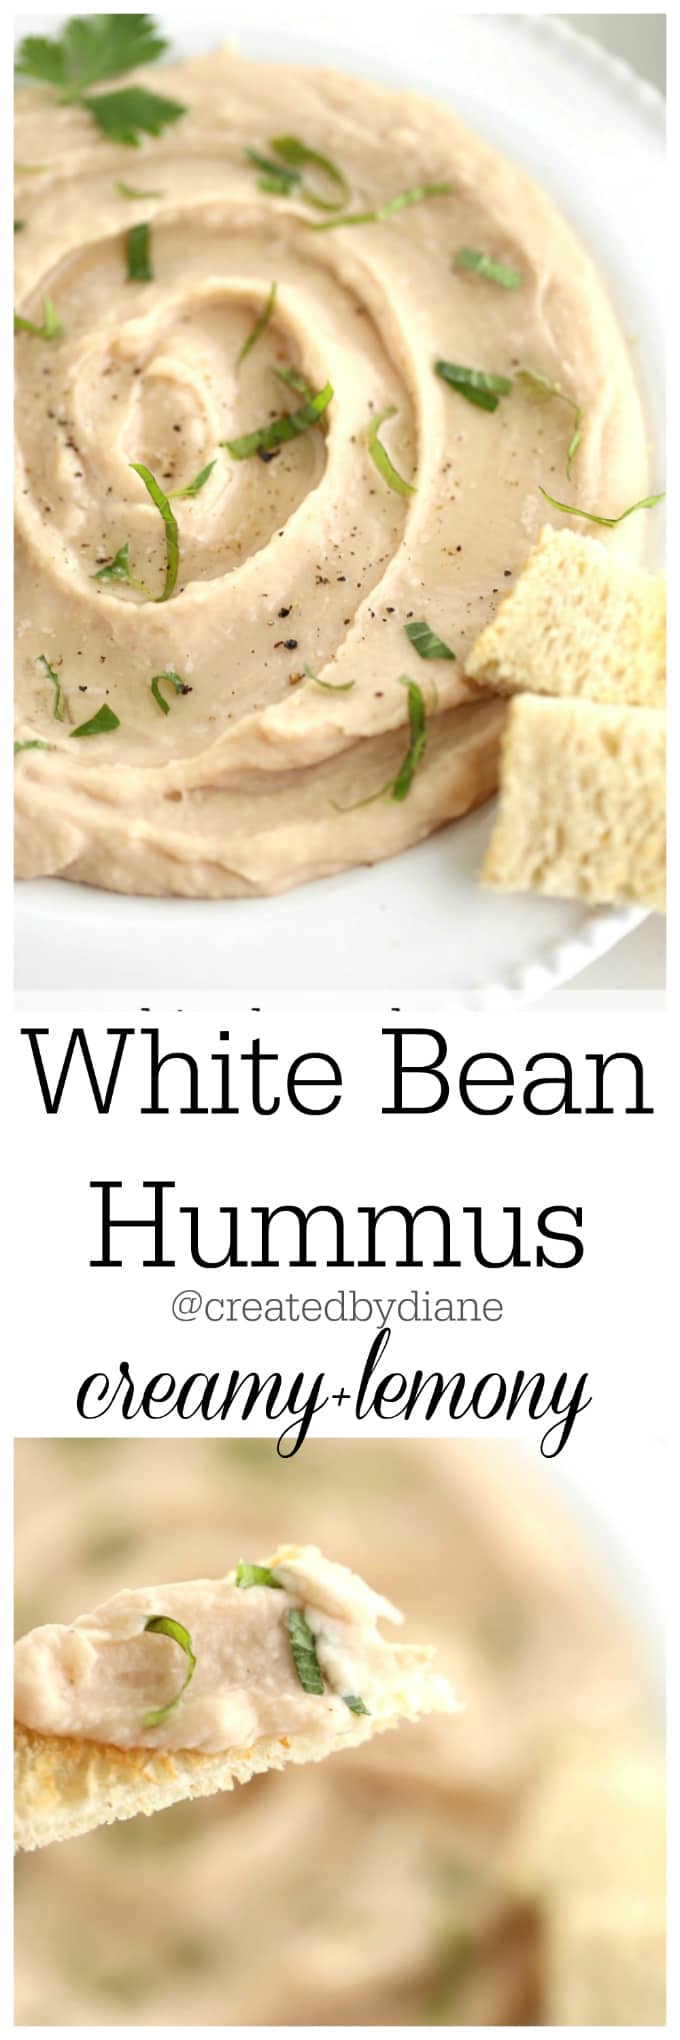 white bean hummus recipe lemony creamy @createdbydiane